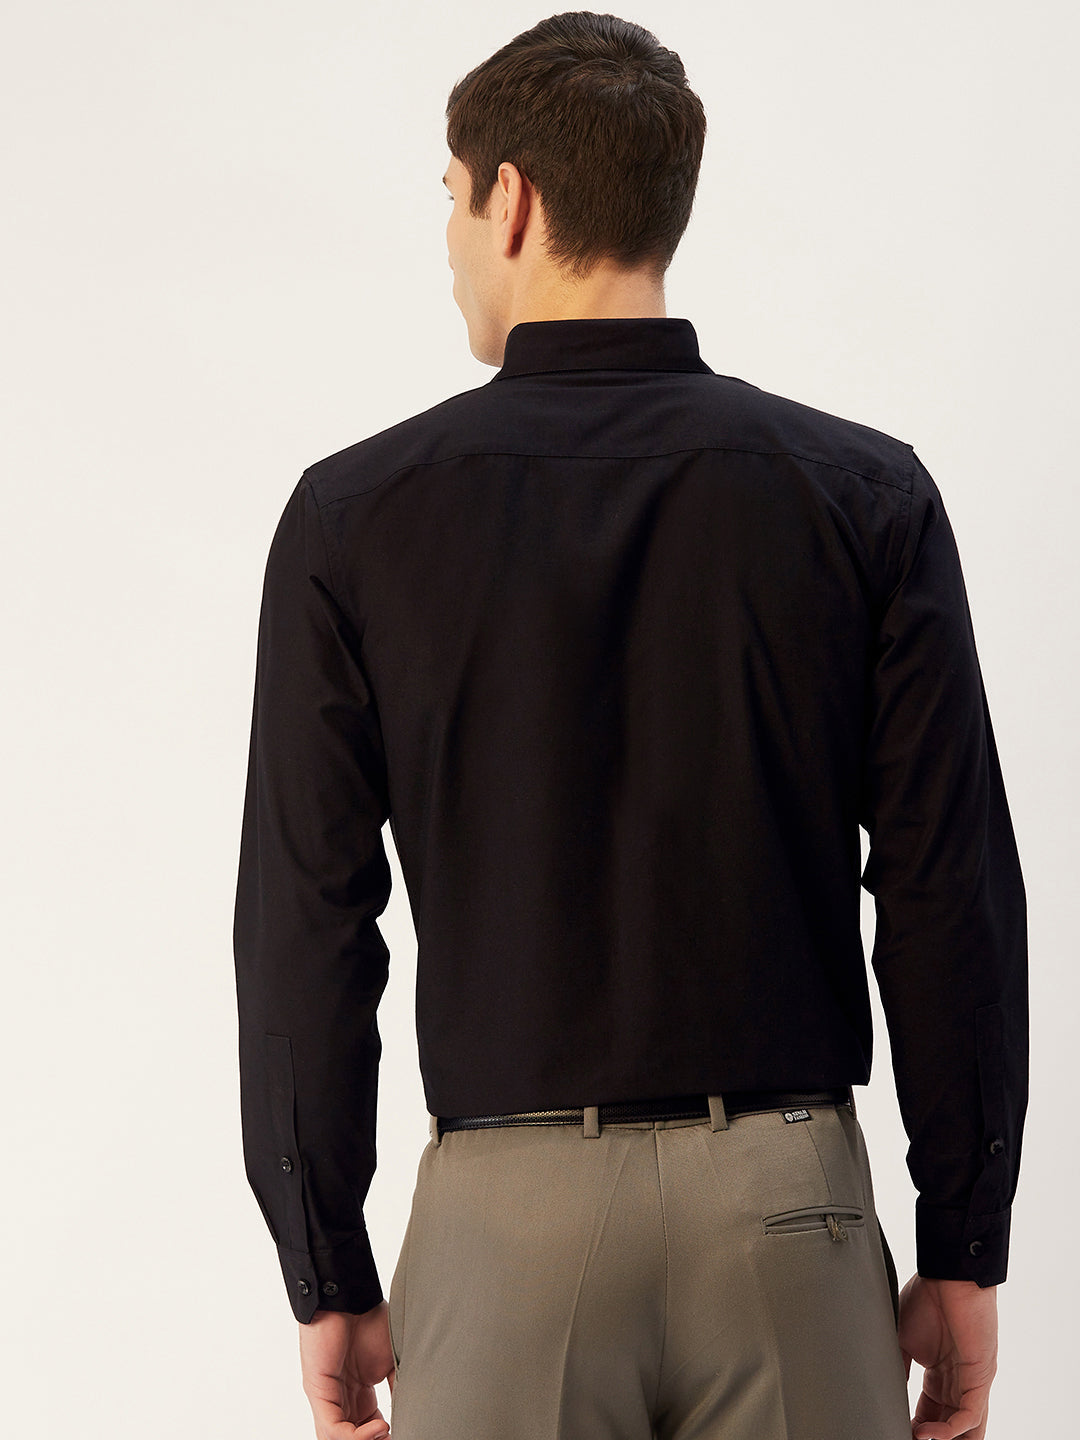 Men's Cotton Printed Formal Shirts ( SF 805Black ) - Jainish